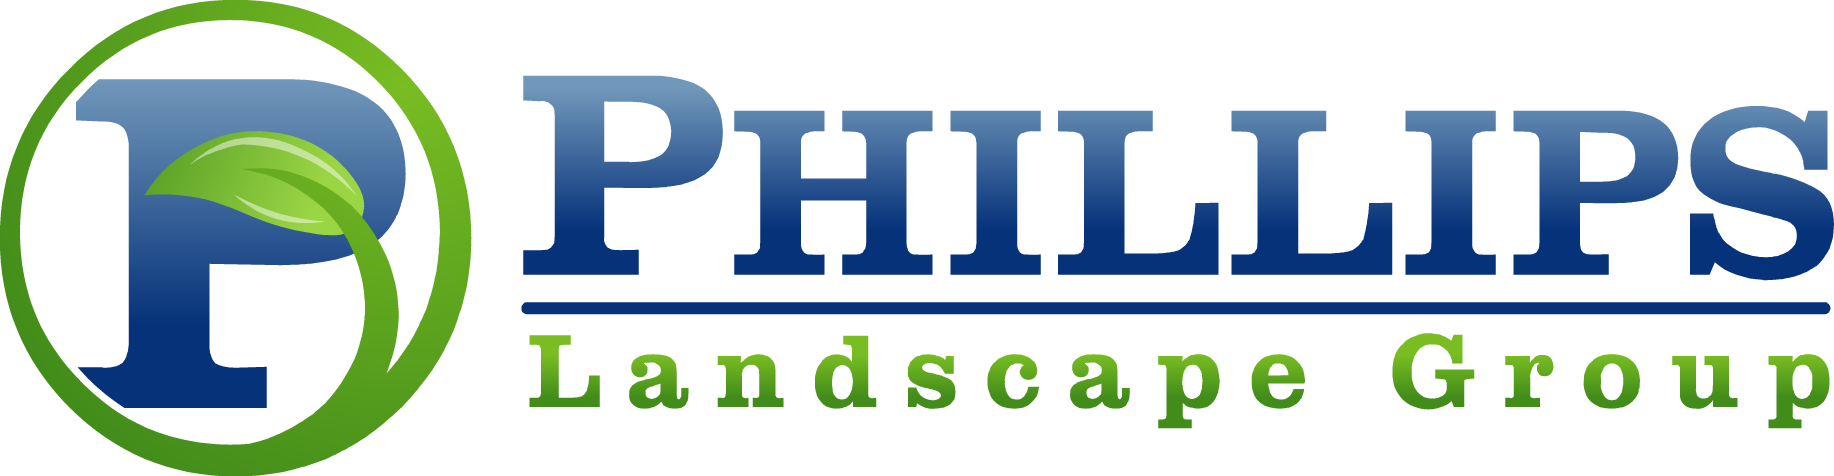 Phillips Landscape Management Logo